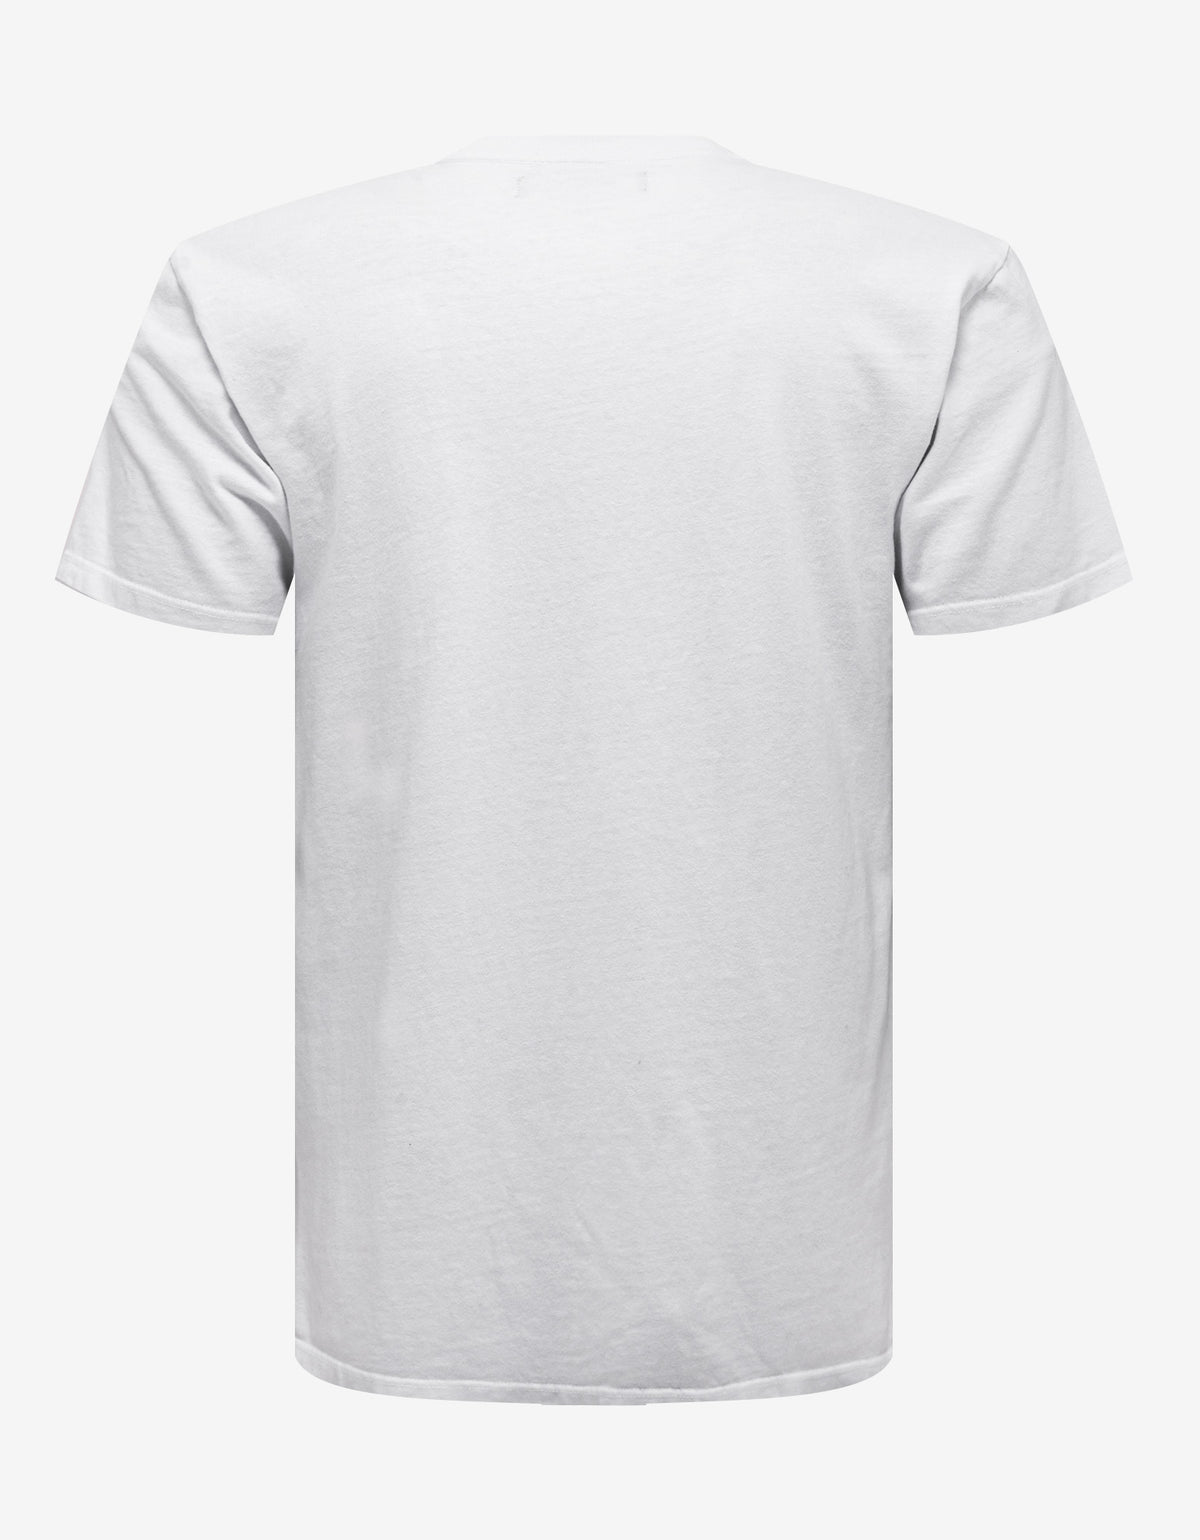 Nahmias KTB White Grillz Print T-Shirt